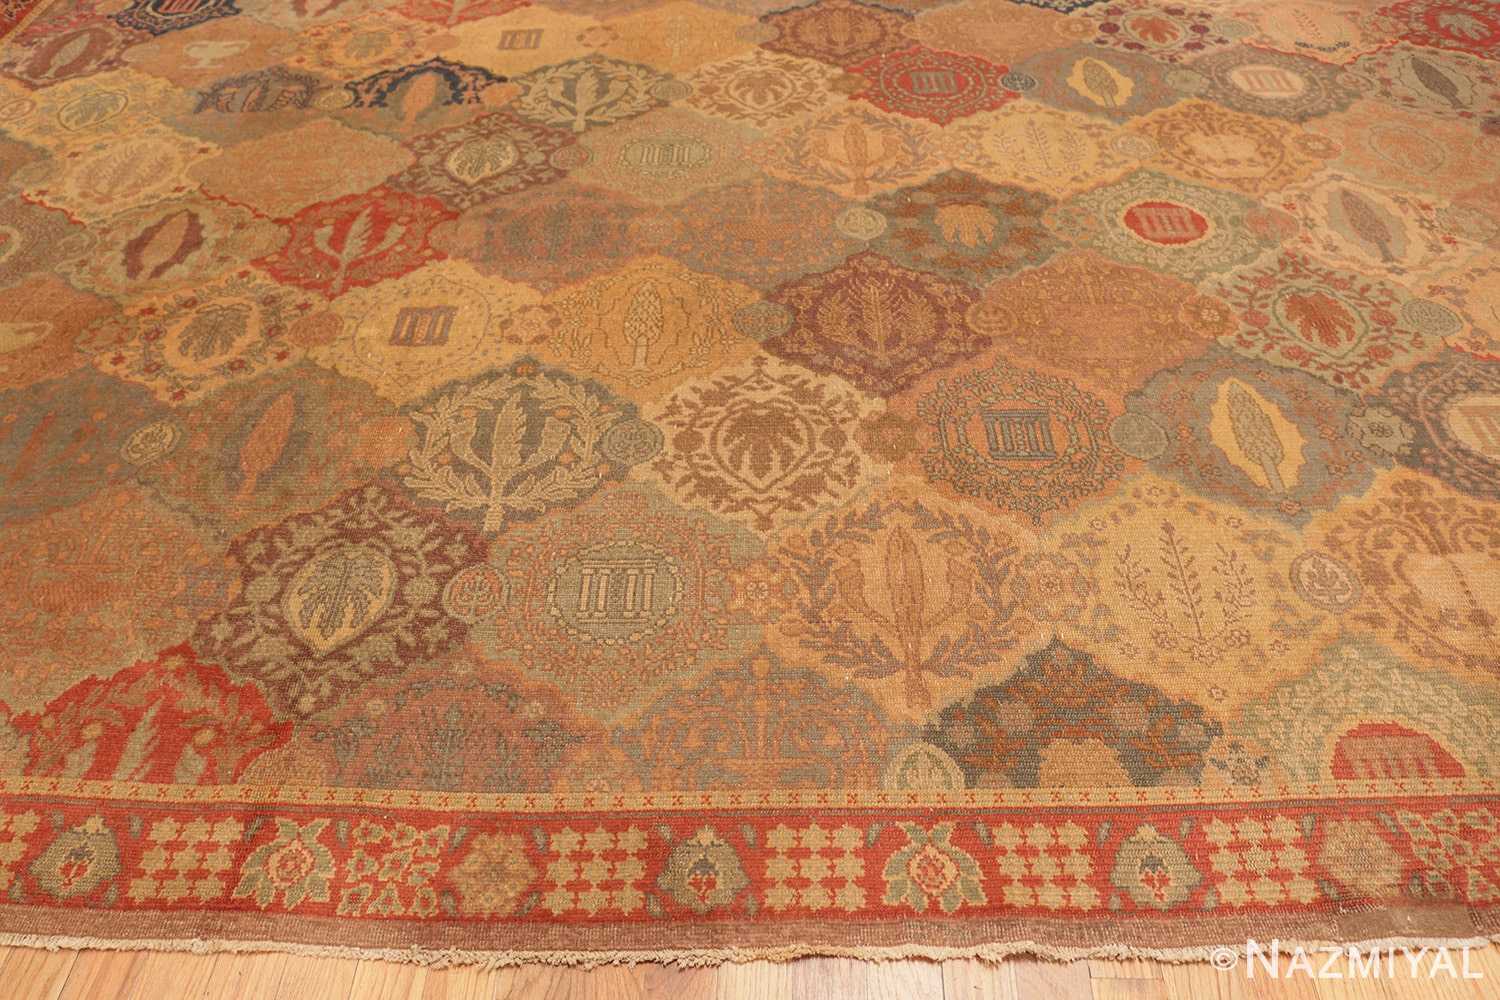 Border antique garden design oversized Israeli Bezalel carpet 48245 by Nazmiyal